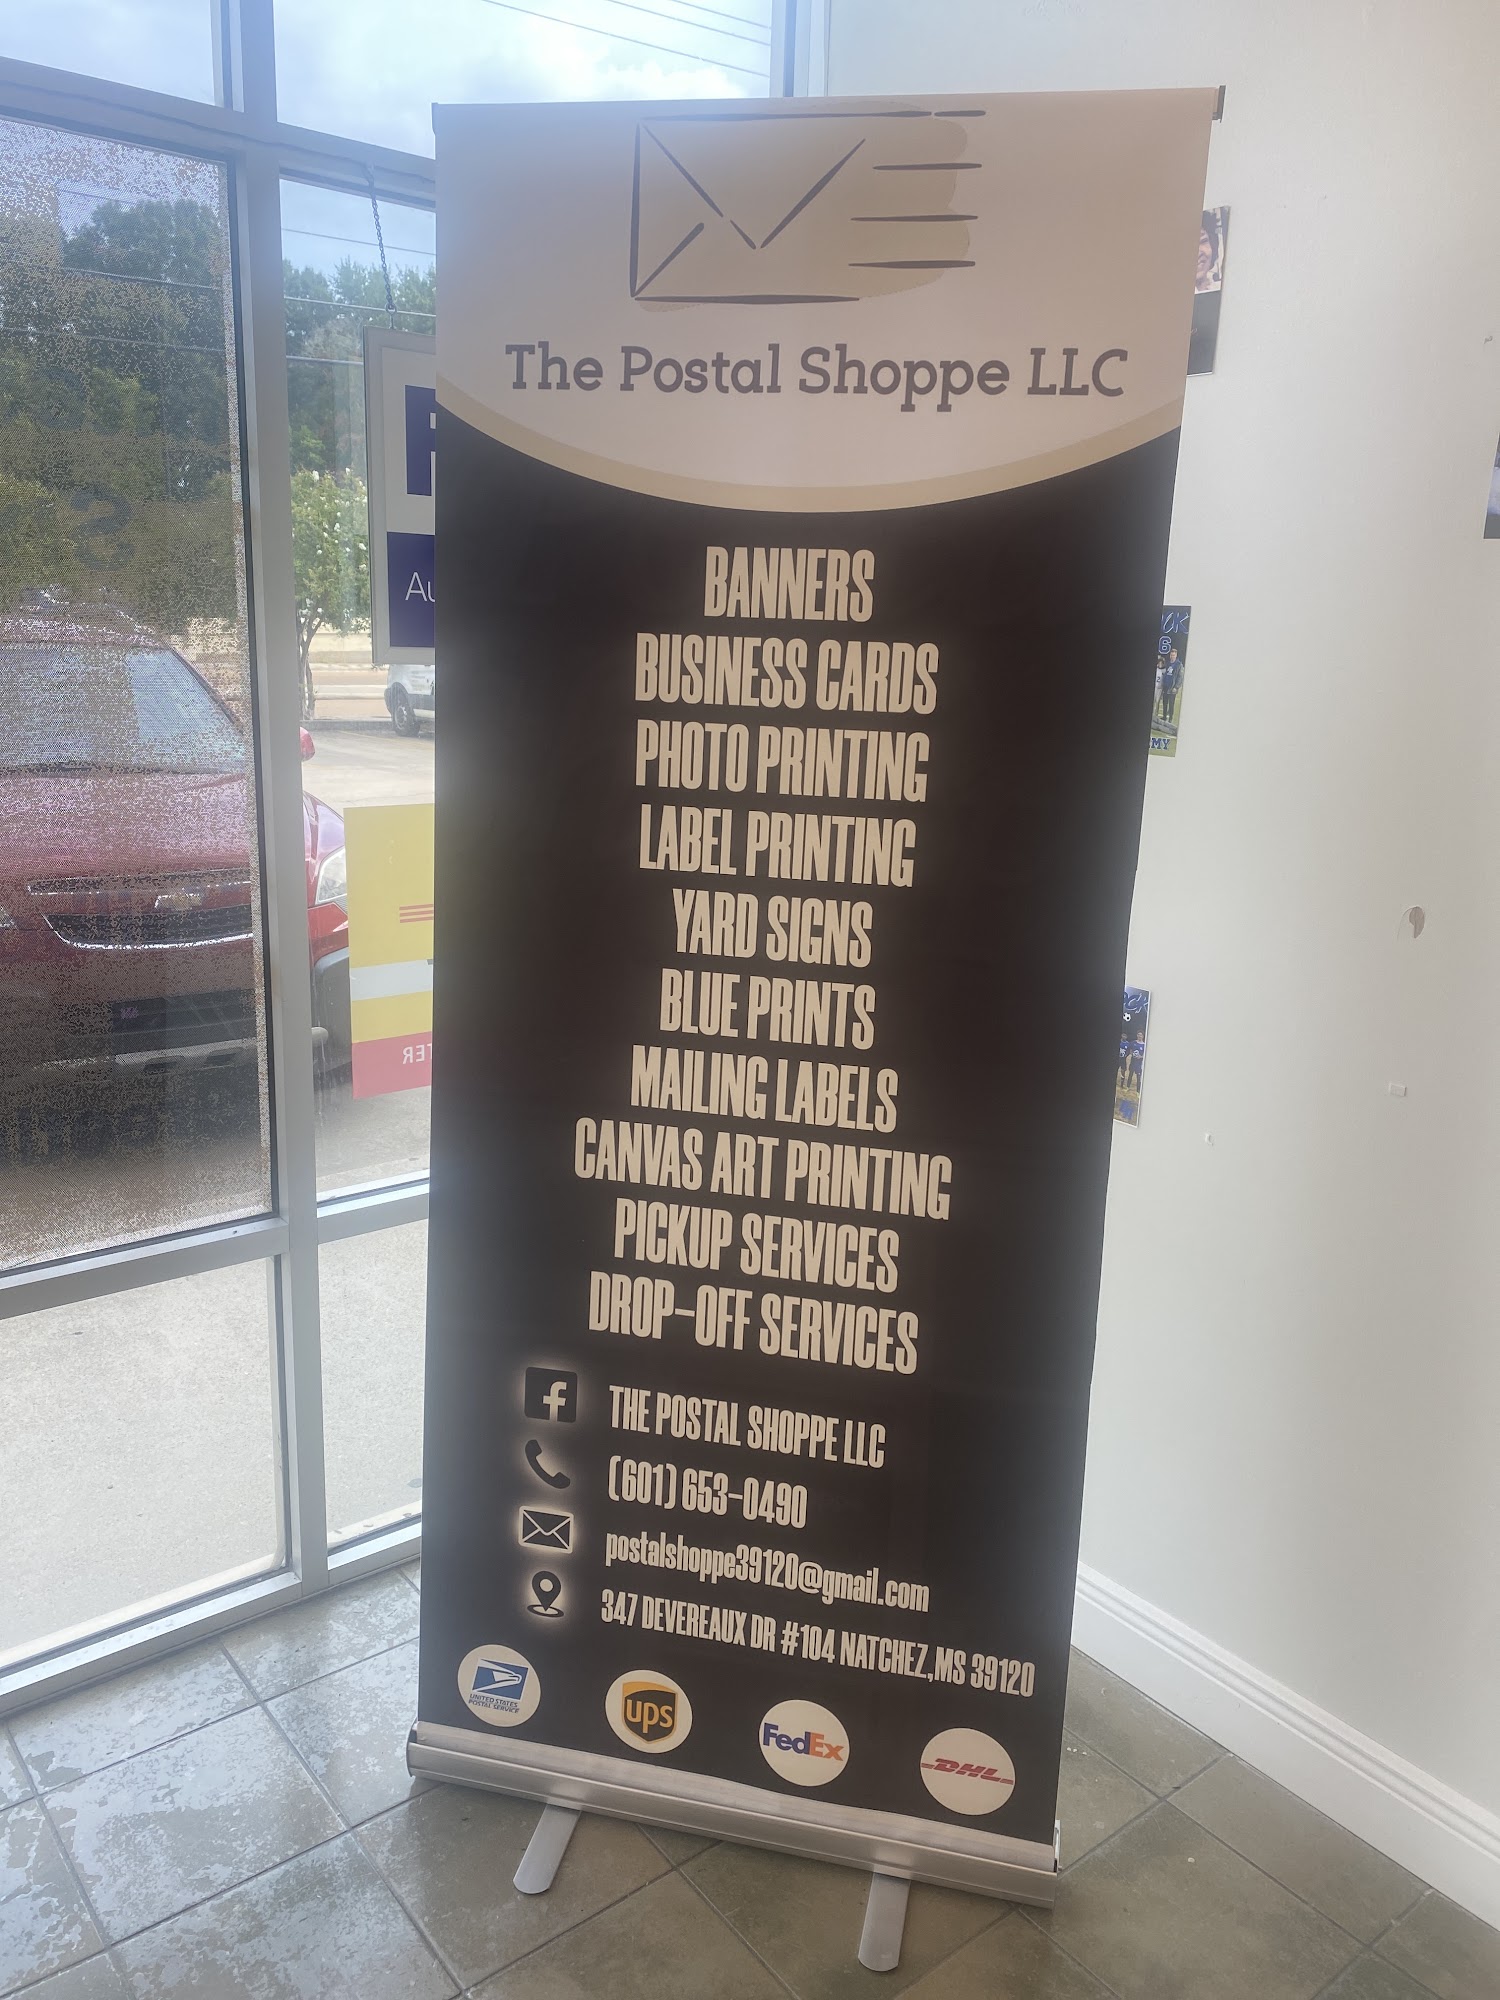 The Postal Shoppe LLC